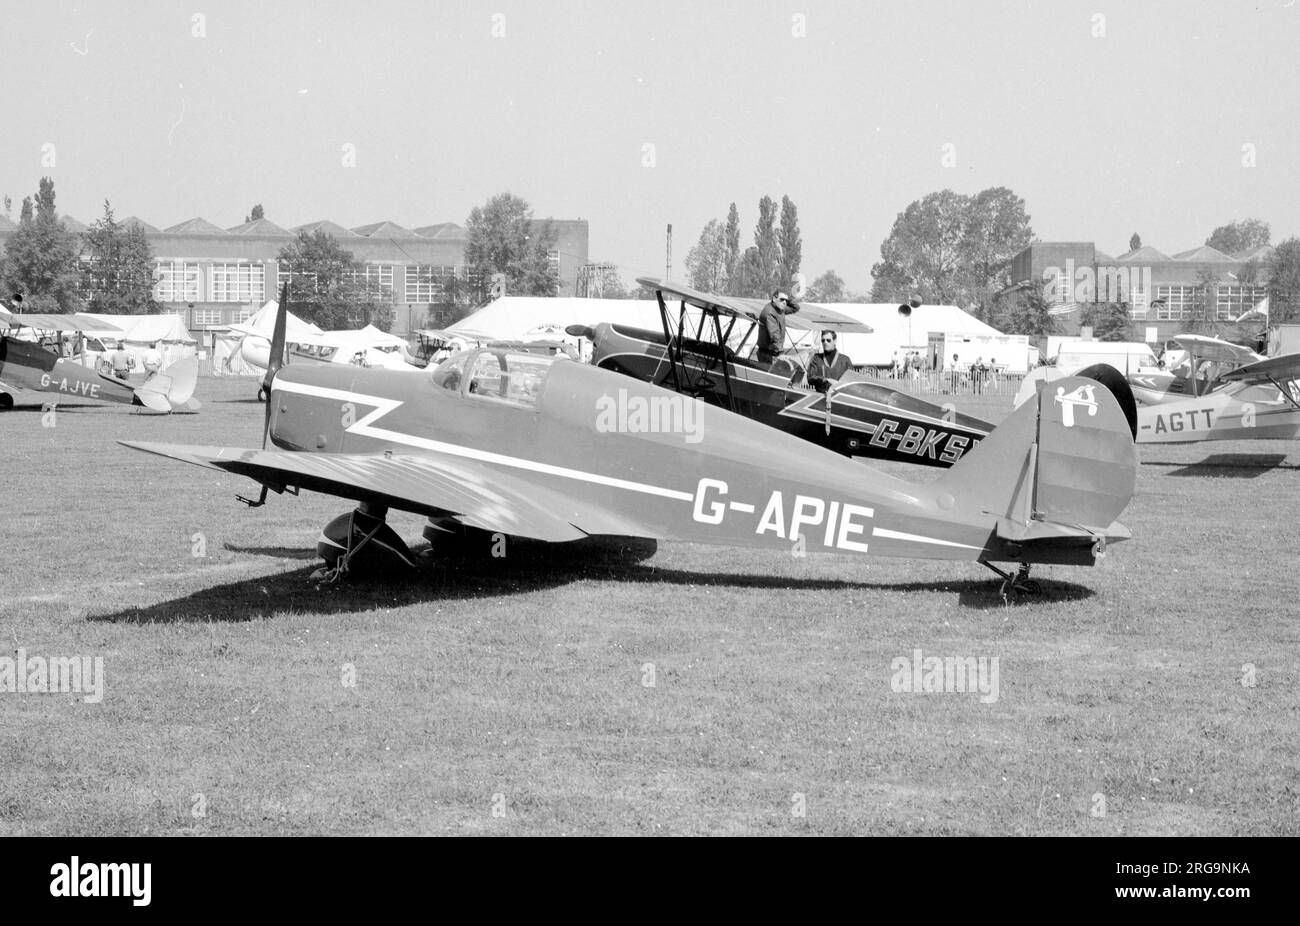 Tipsy Belfair G-APIE (msn 535), built by Avions Fairey SA in Belgium, at Cranfield. Stock Photo